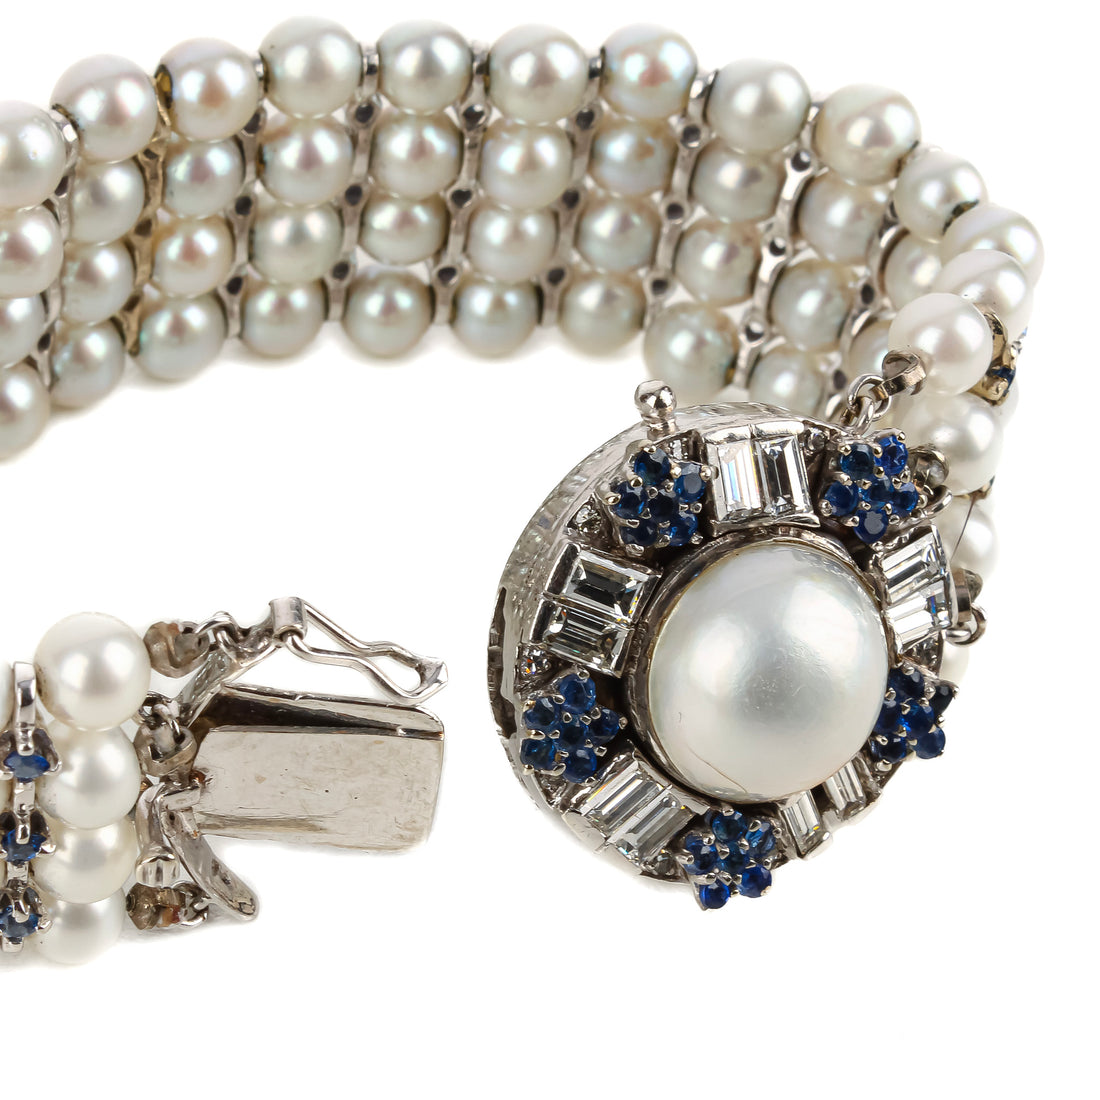 14K White Gold Pearl, Sapphire, & Diamond Bracelet